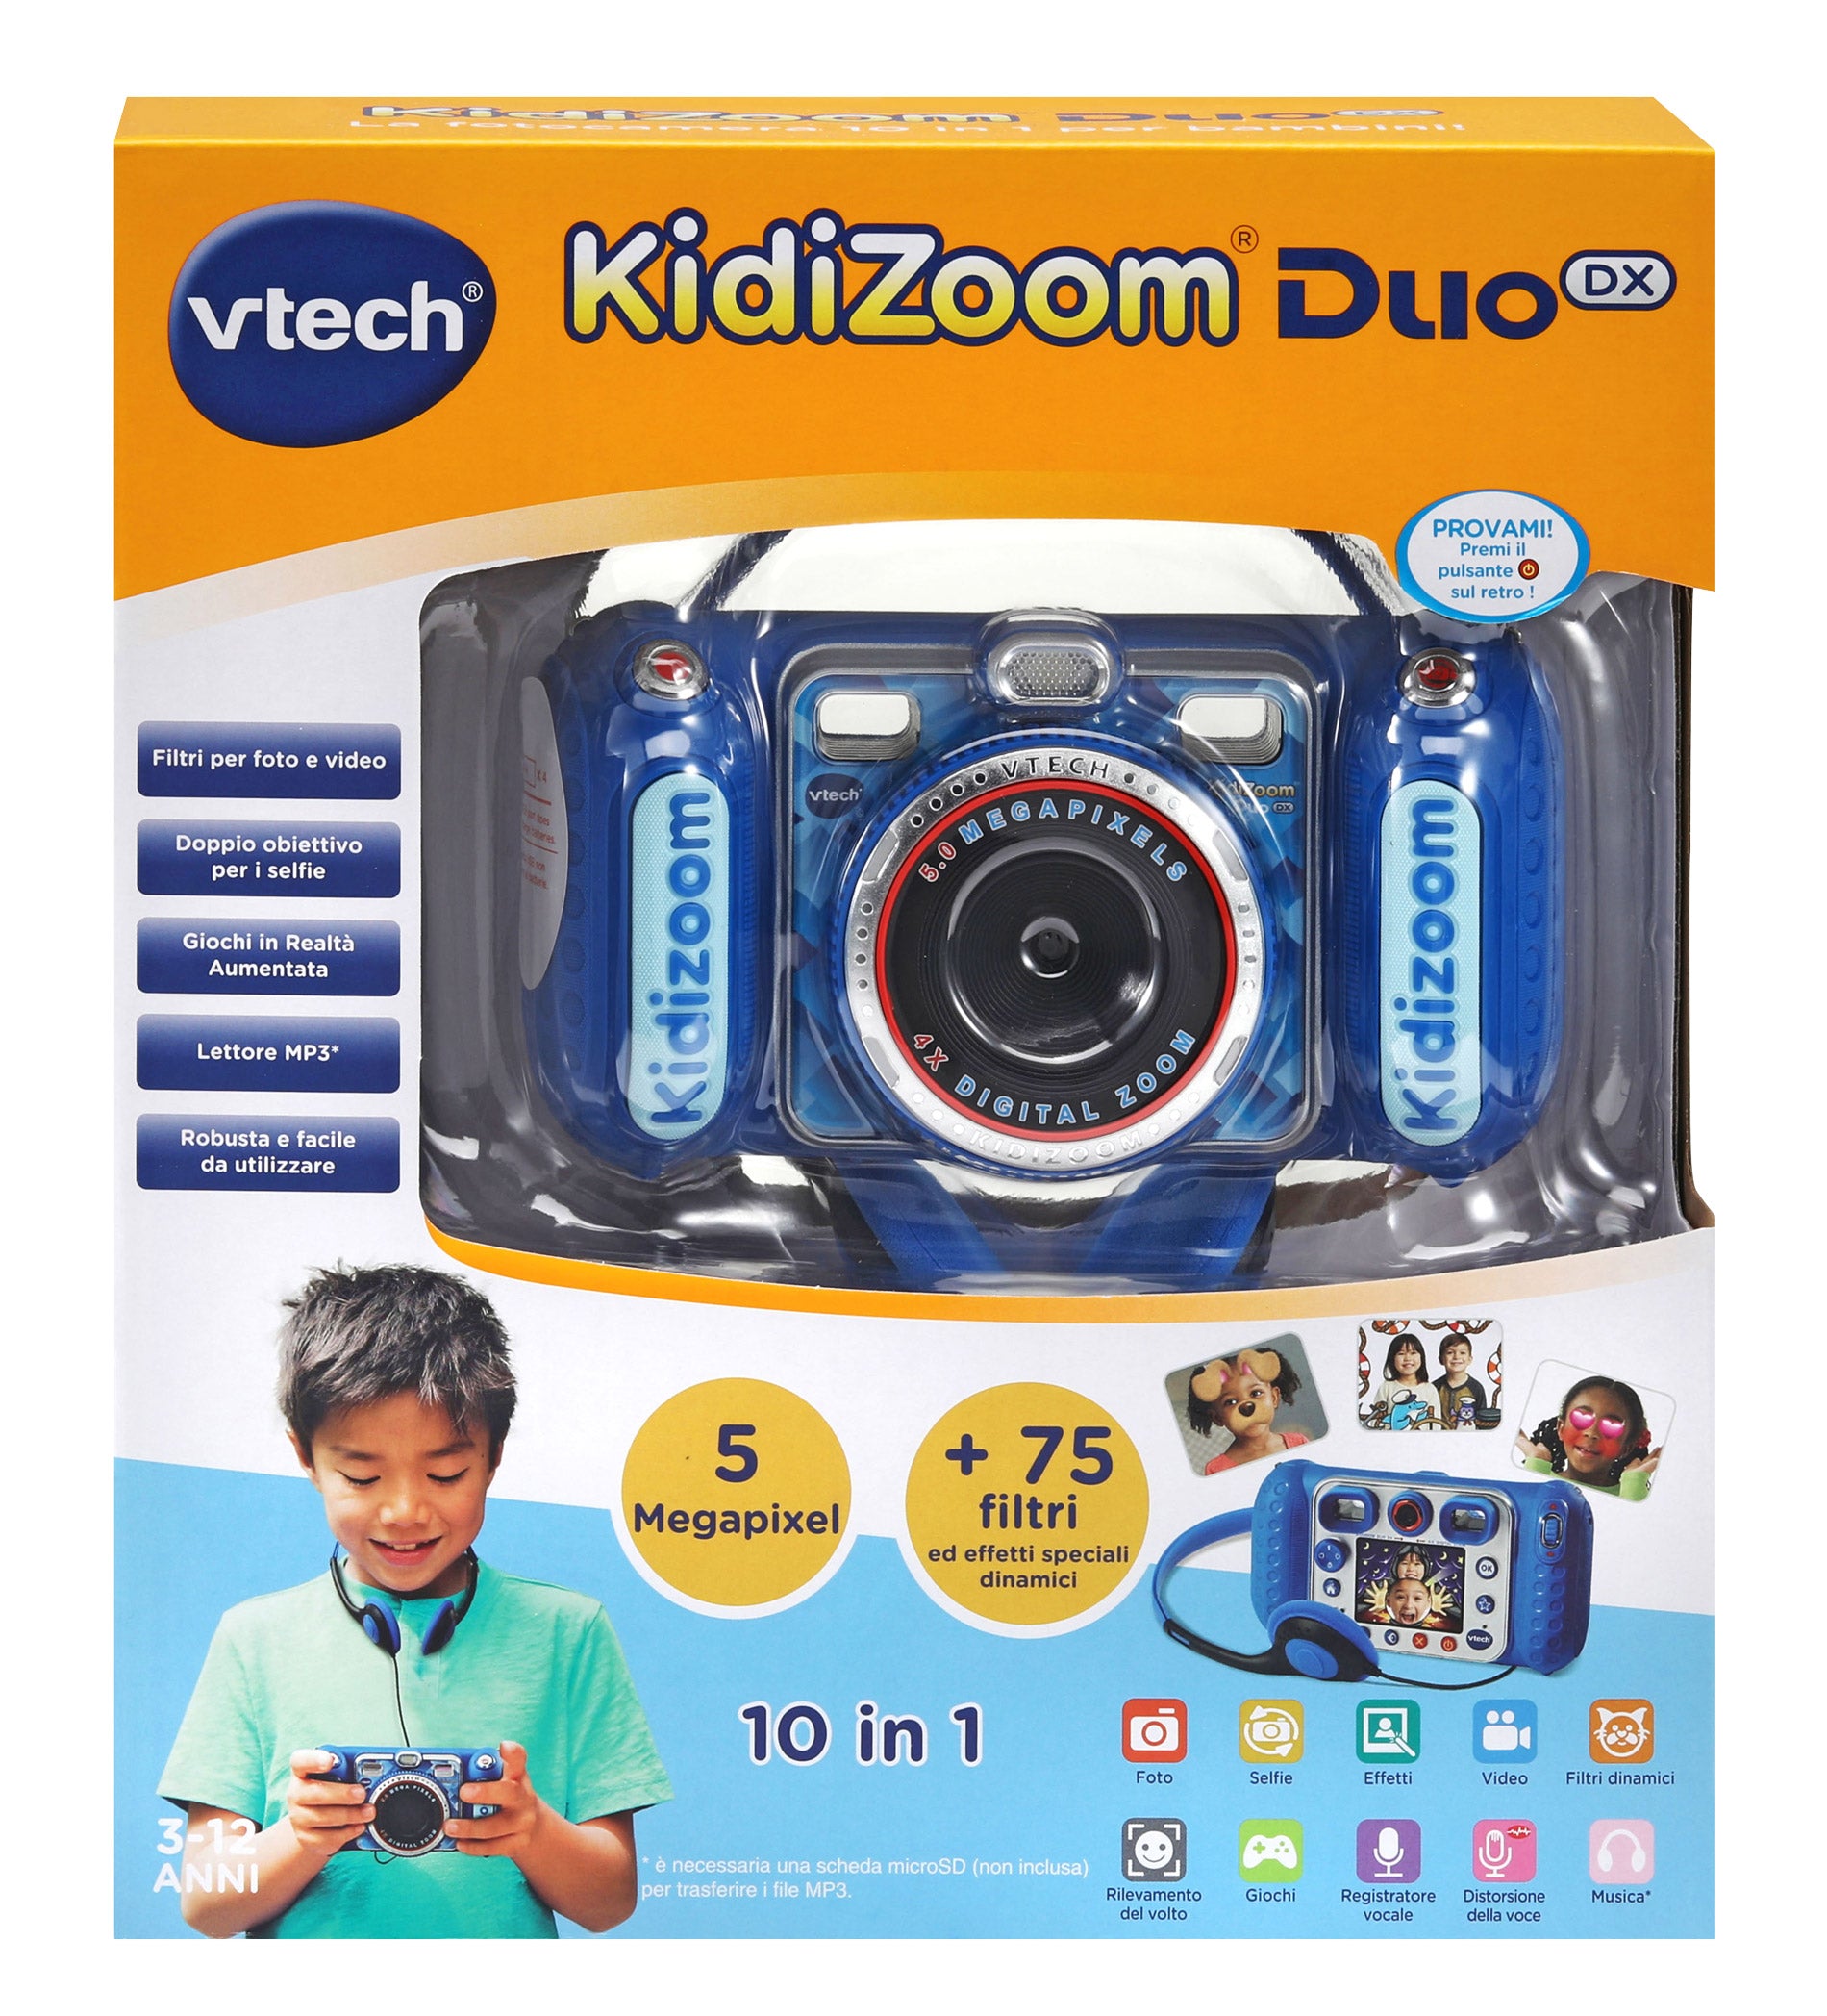 80-520007 VTECH Kidizoom ® Duo DX Blu